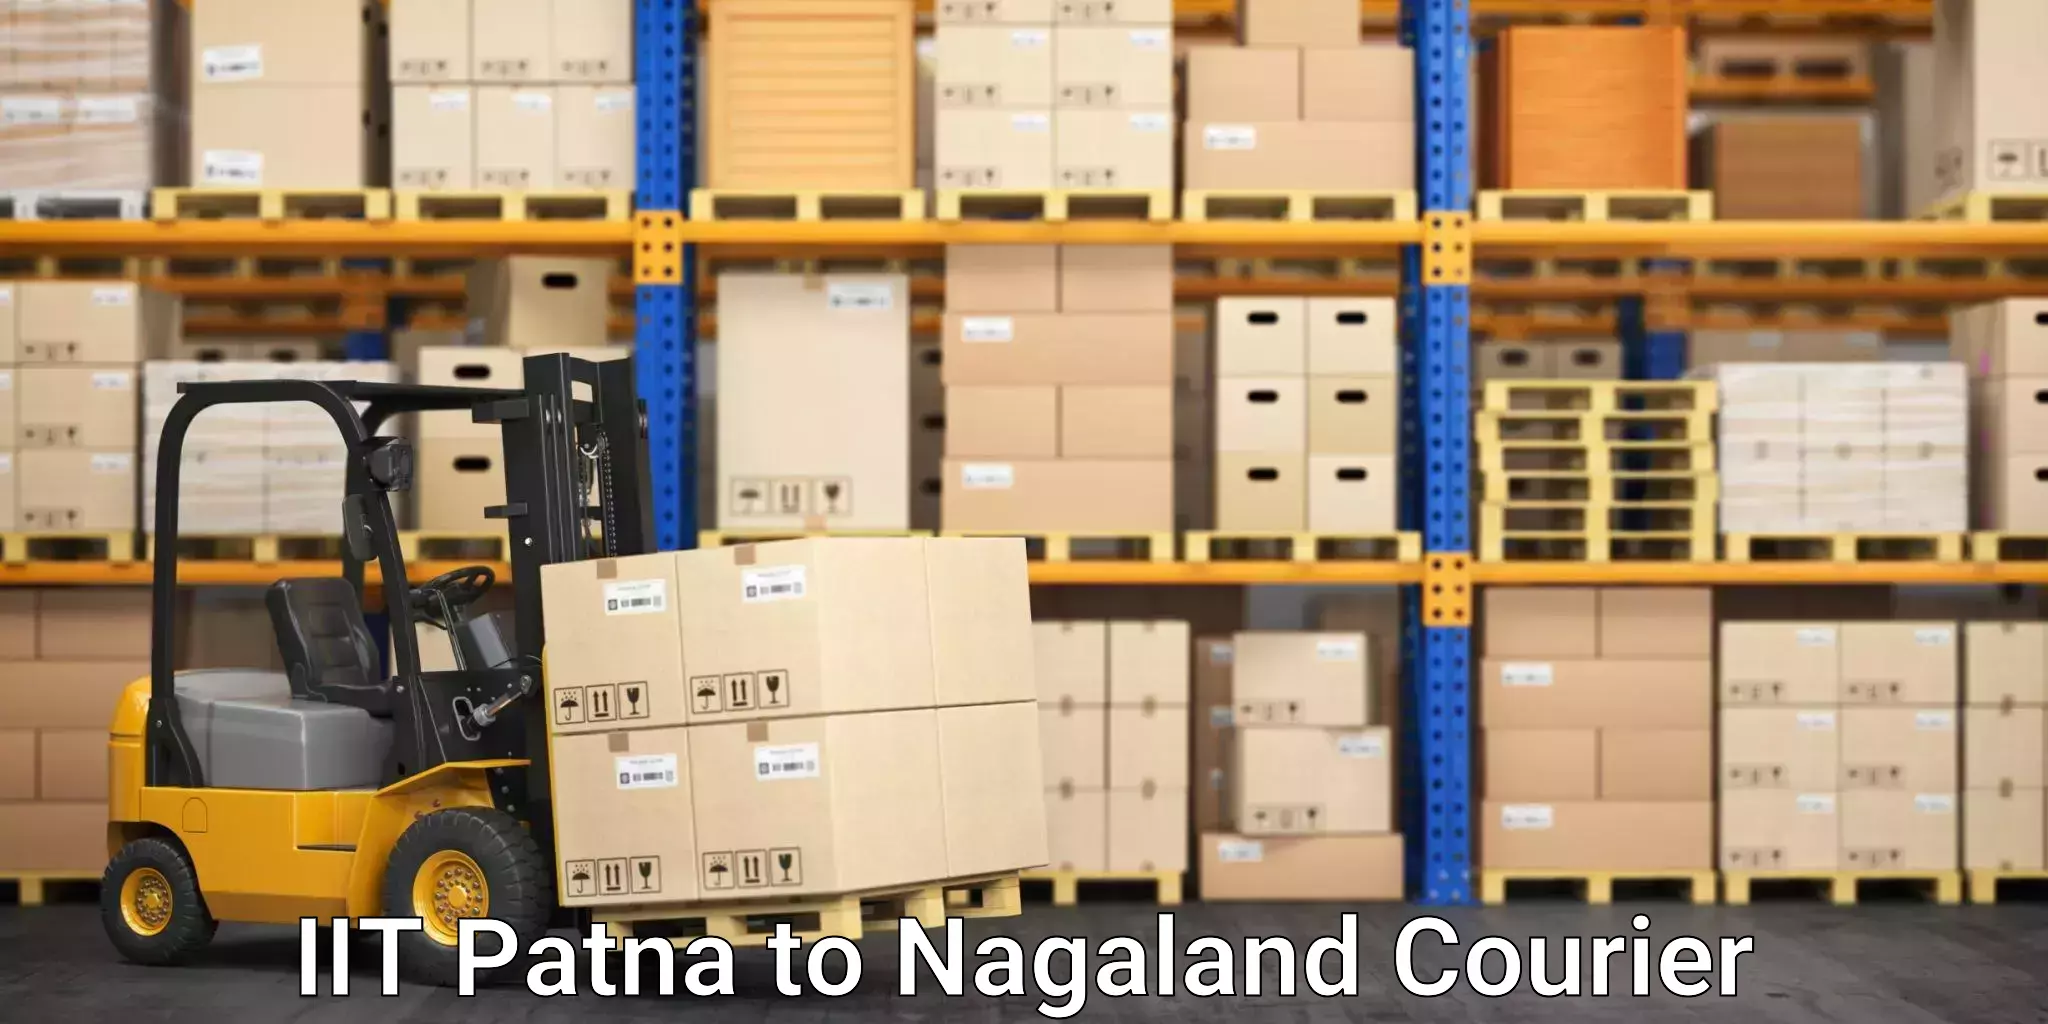 Specialized moving company IIT Patna to Nagaland